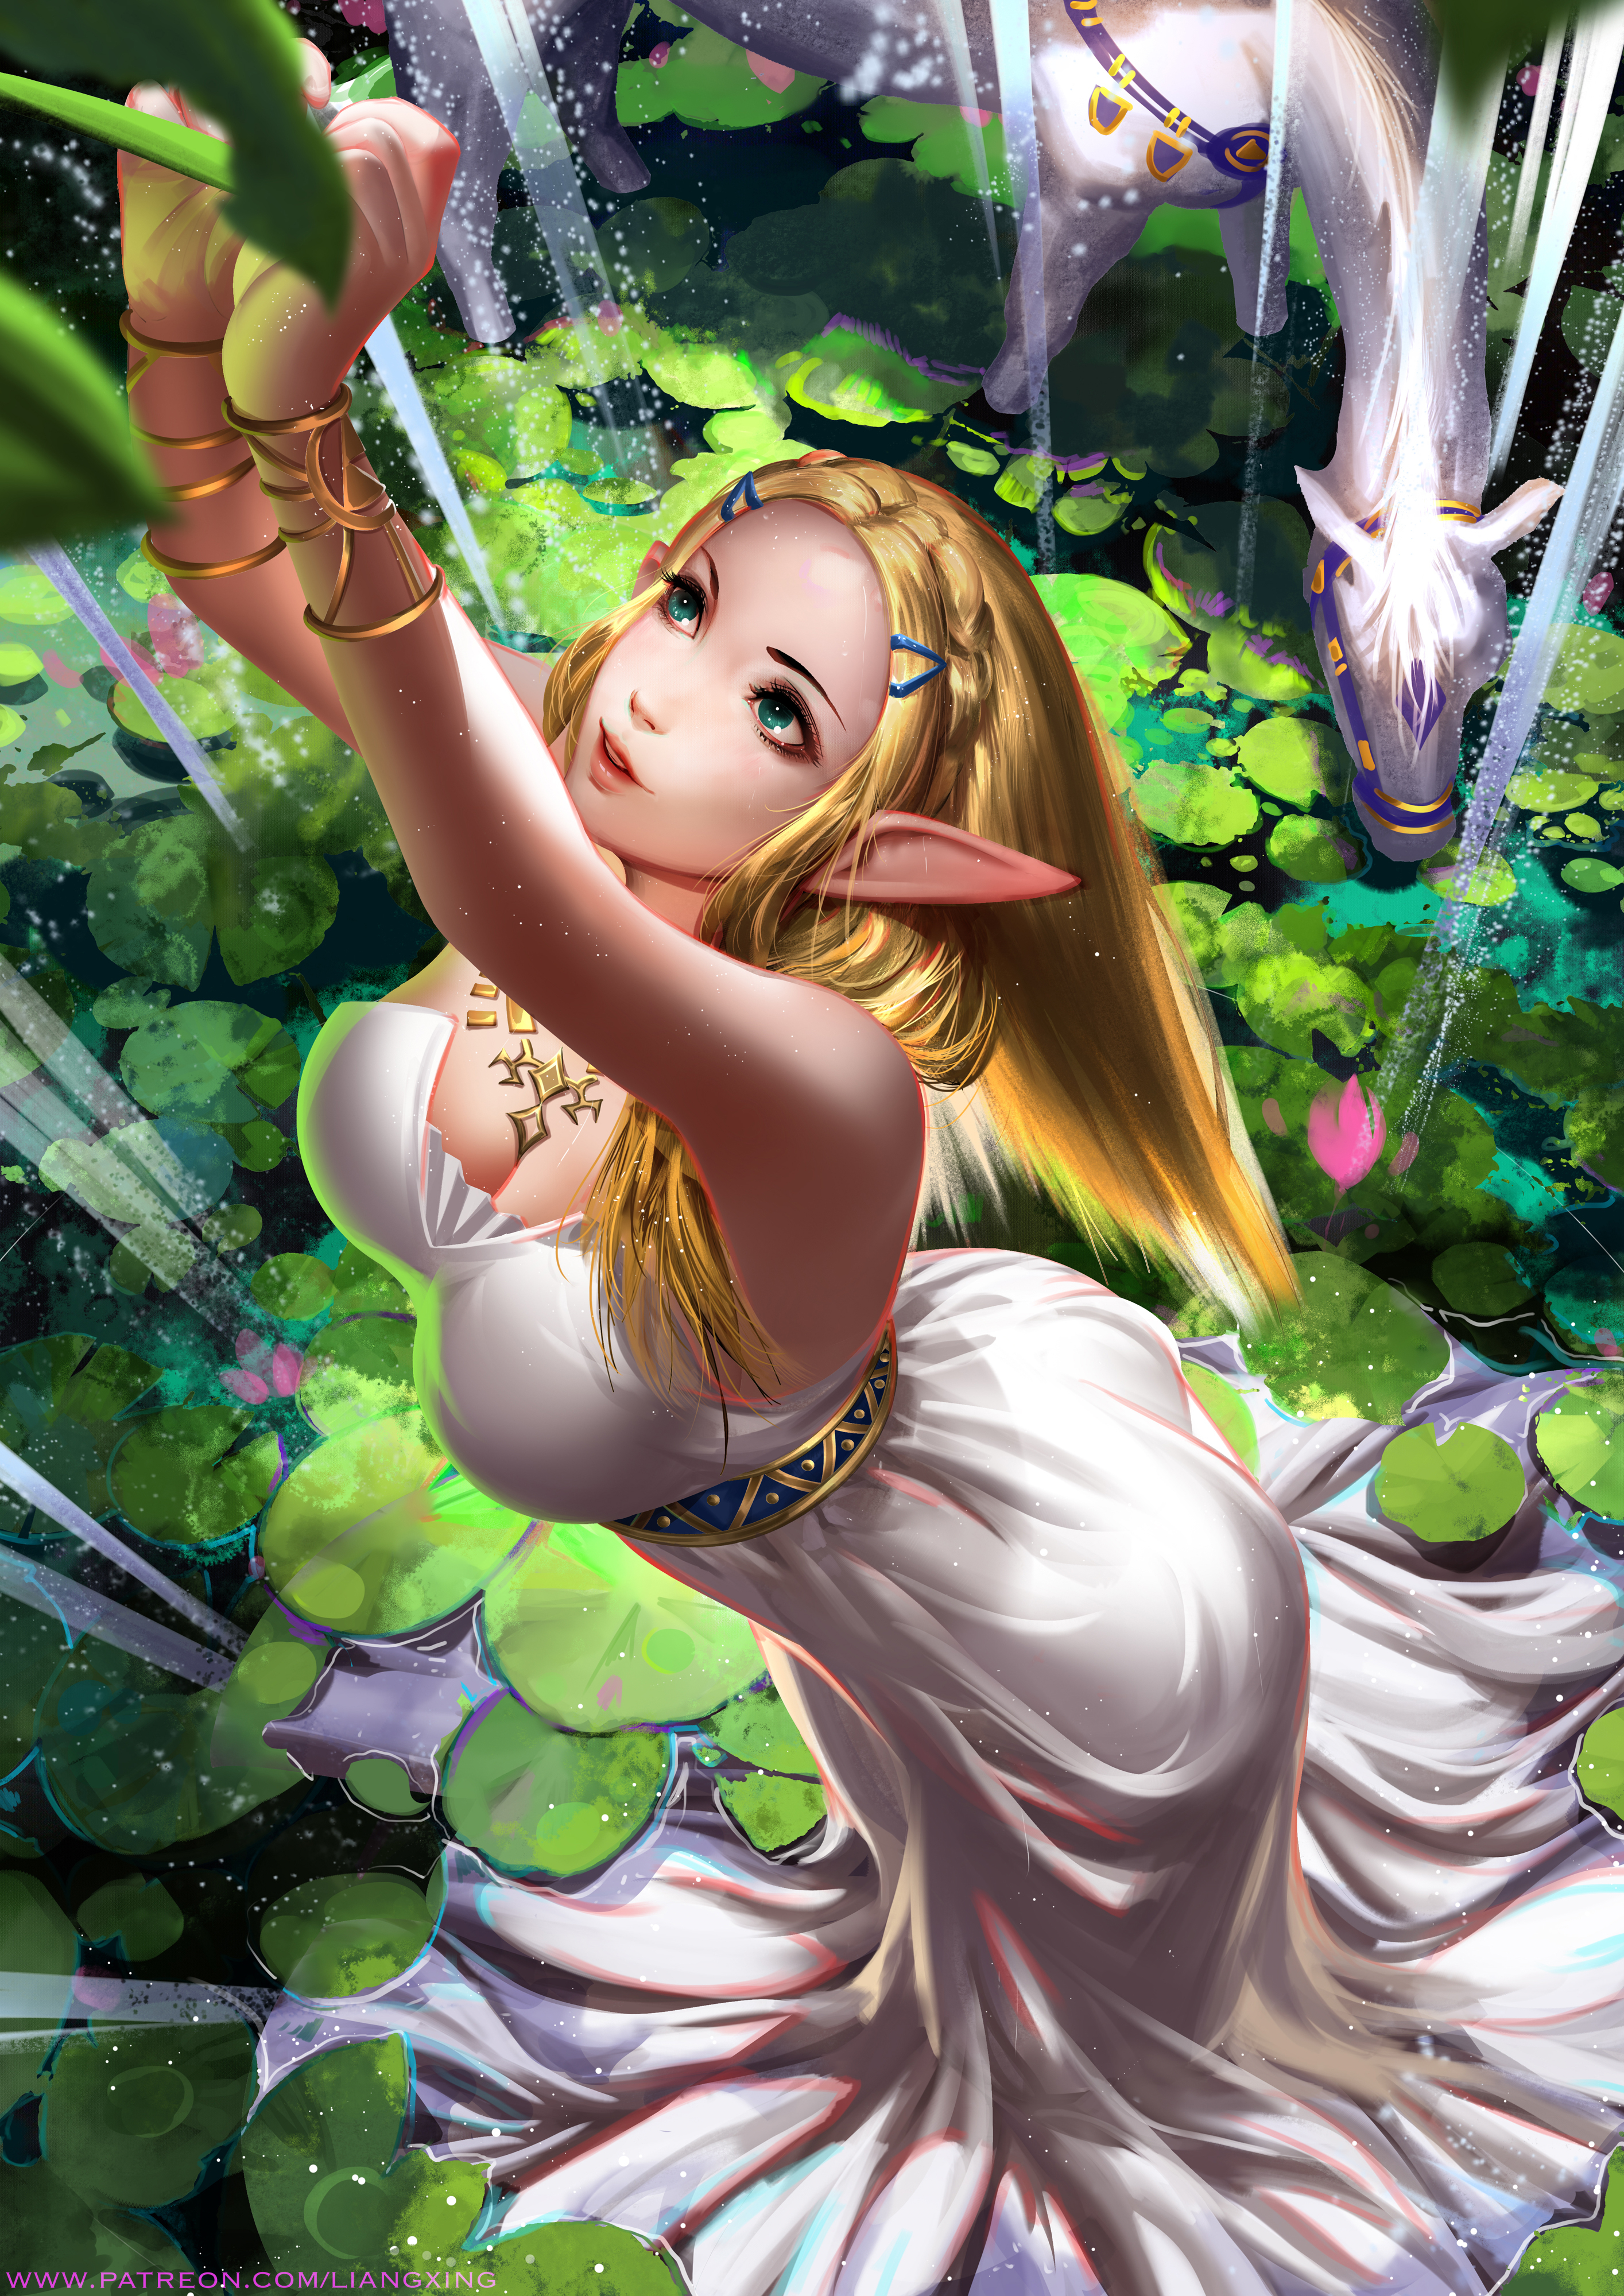 Zelda The Legend Of Zelda Video Games Nintendo Video Game Girls Elves Pointy Ears Blonde Water Lily  2829x4000